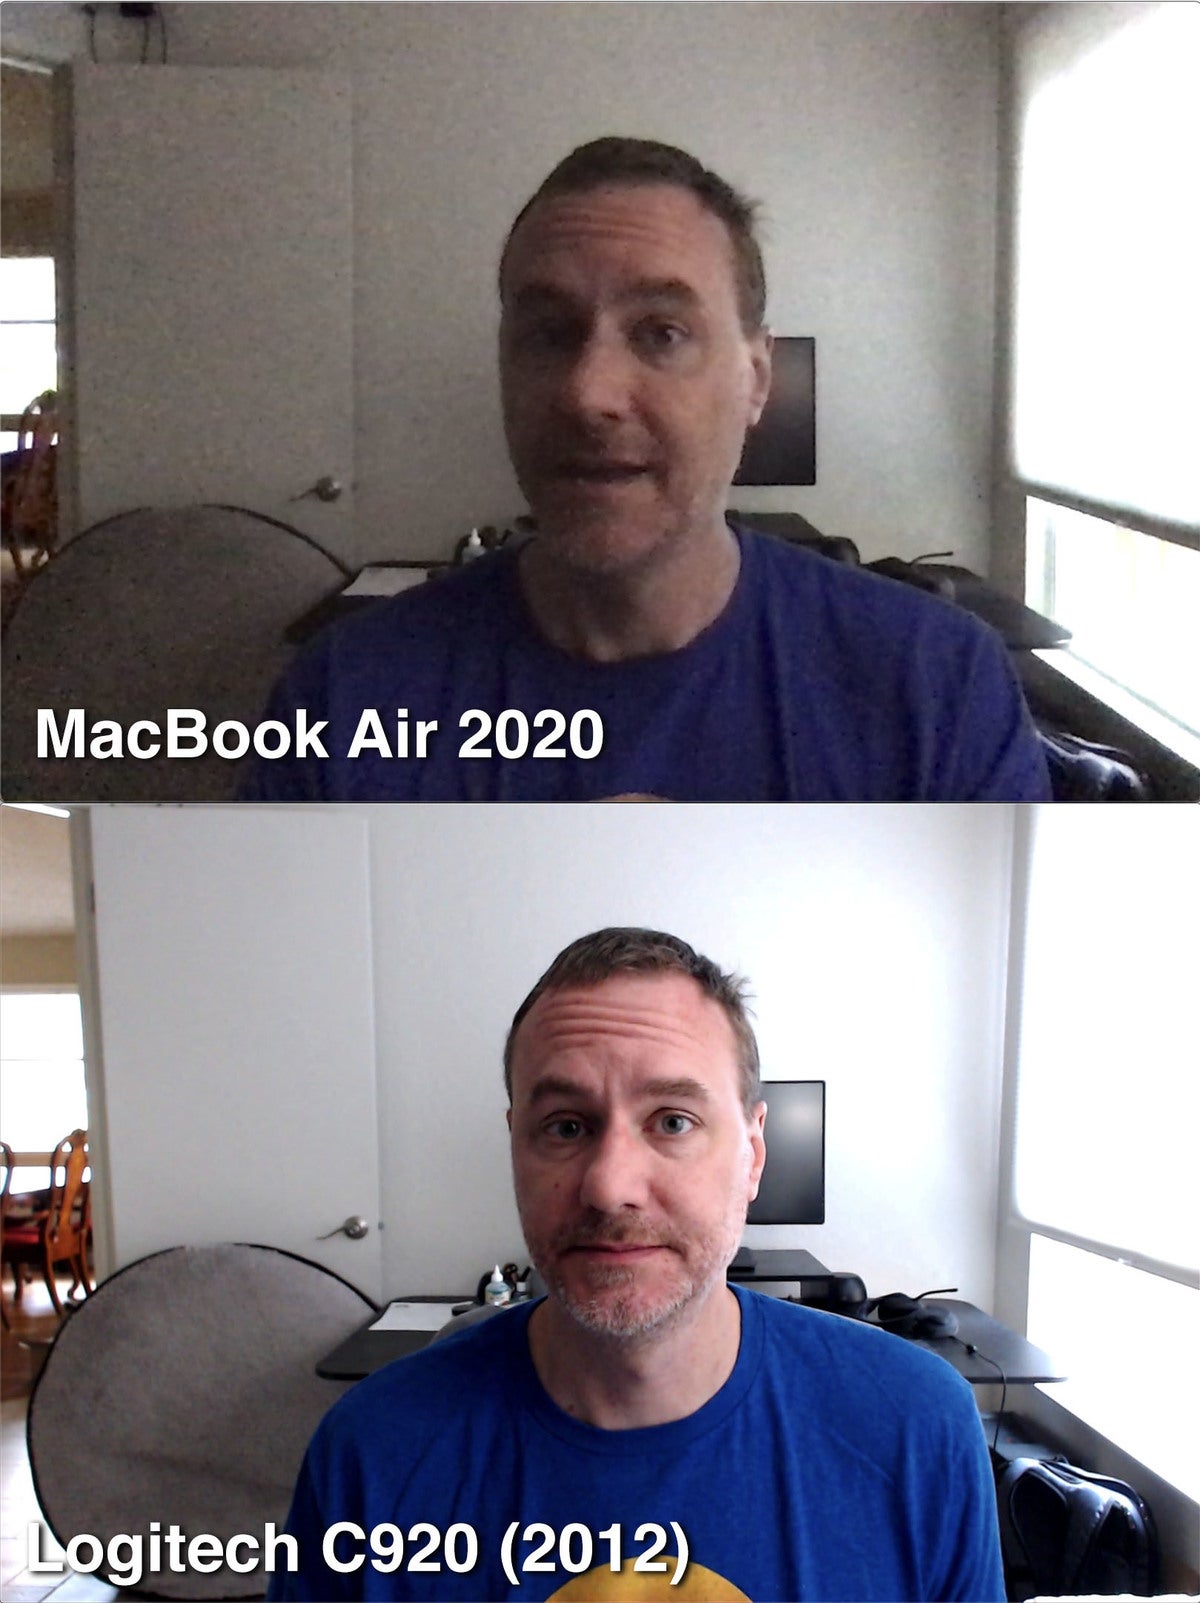 Macbook Air 2020 Review Macworld - how to make shirts on roblox 2020 mac